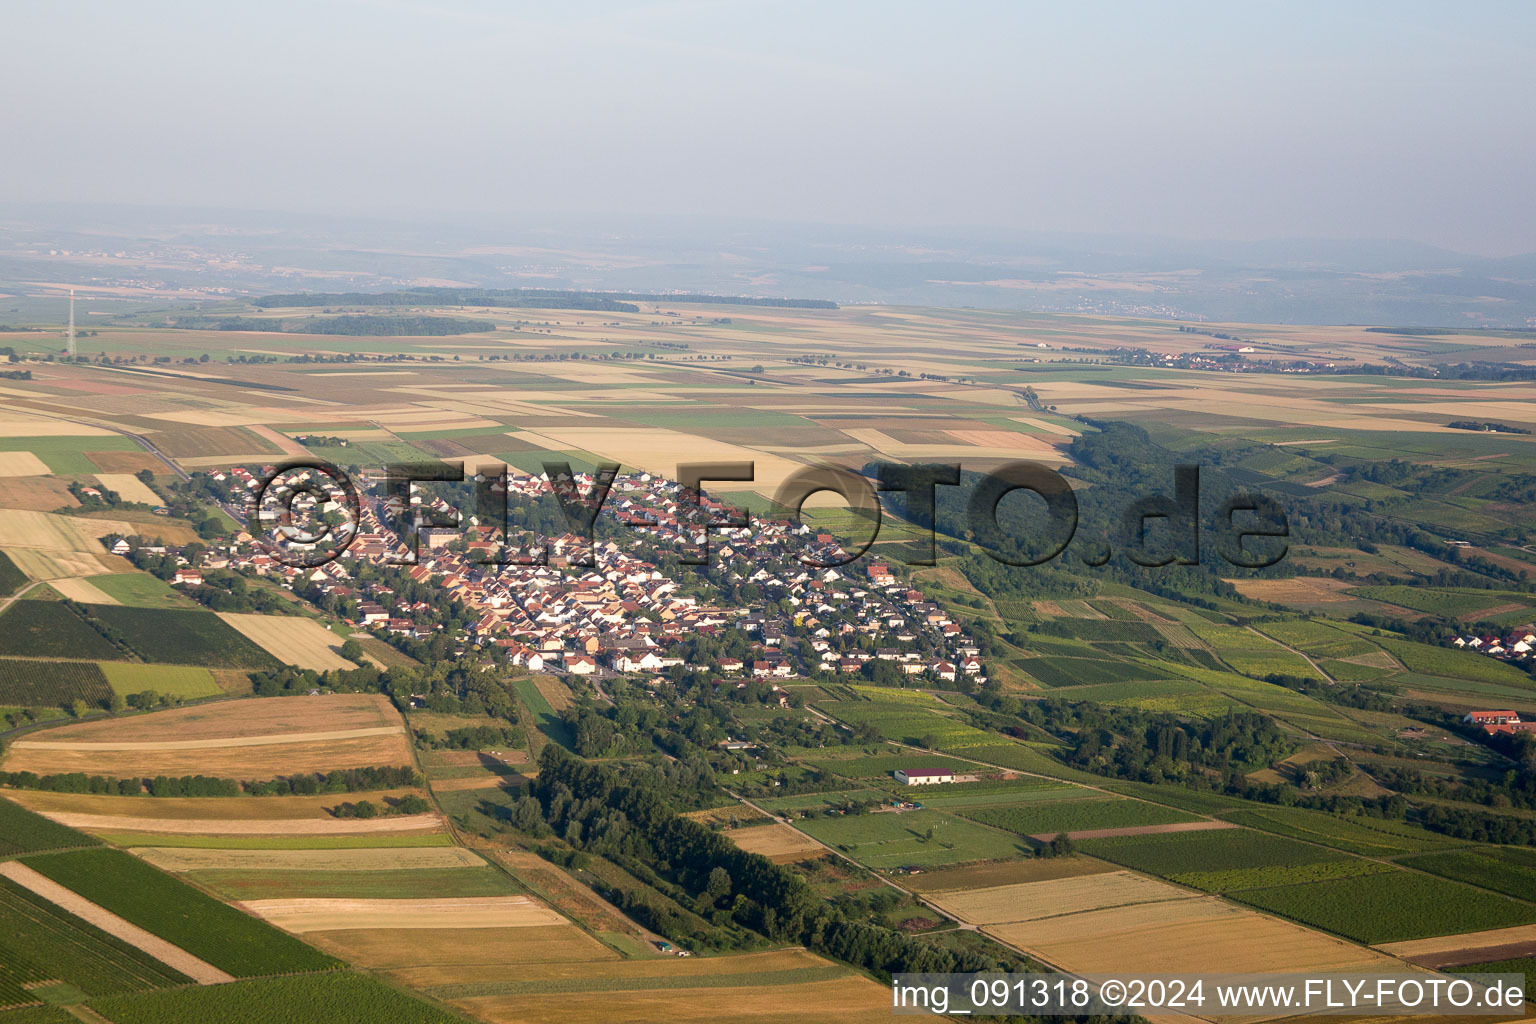 Partenheim in the state Rhineland-Palatinate, Germany